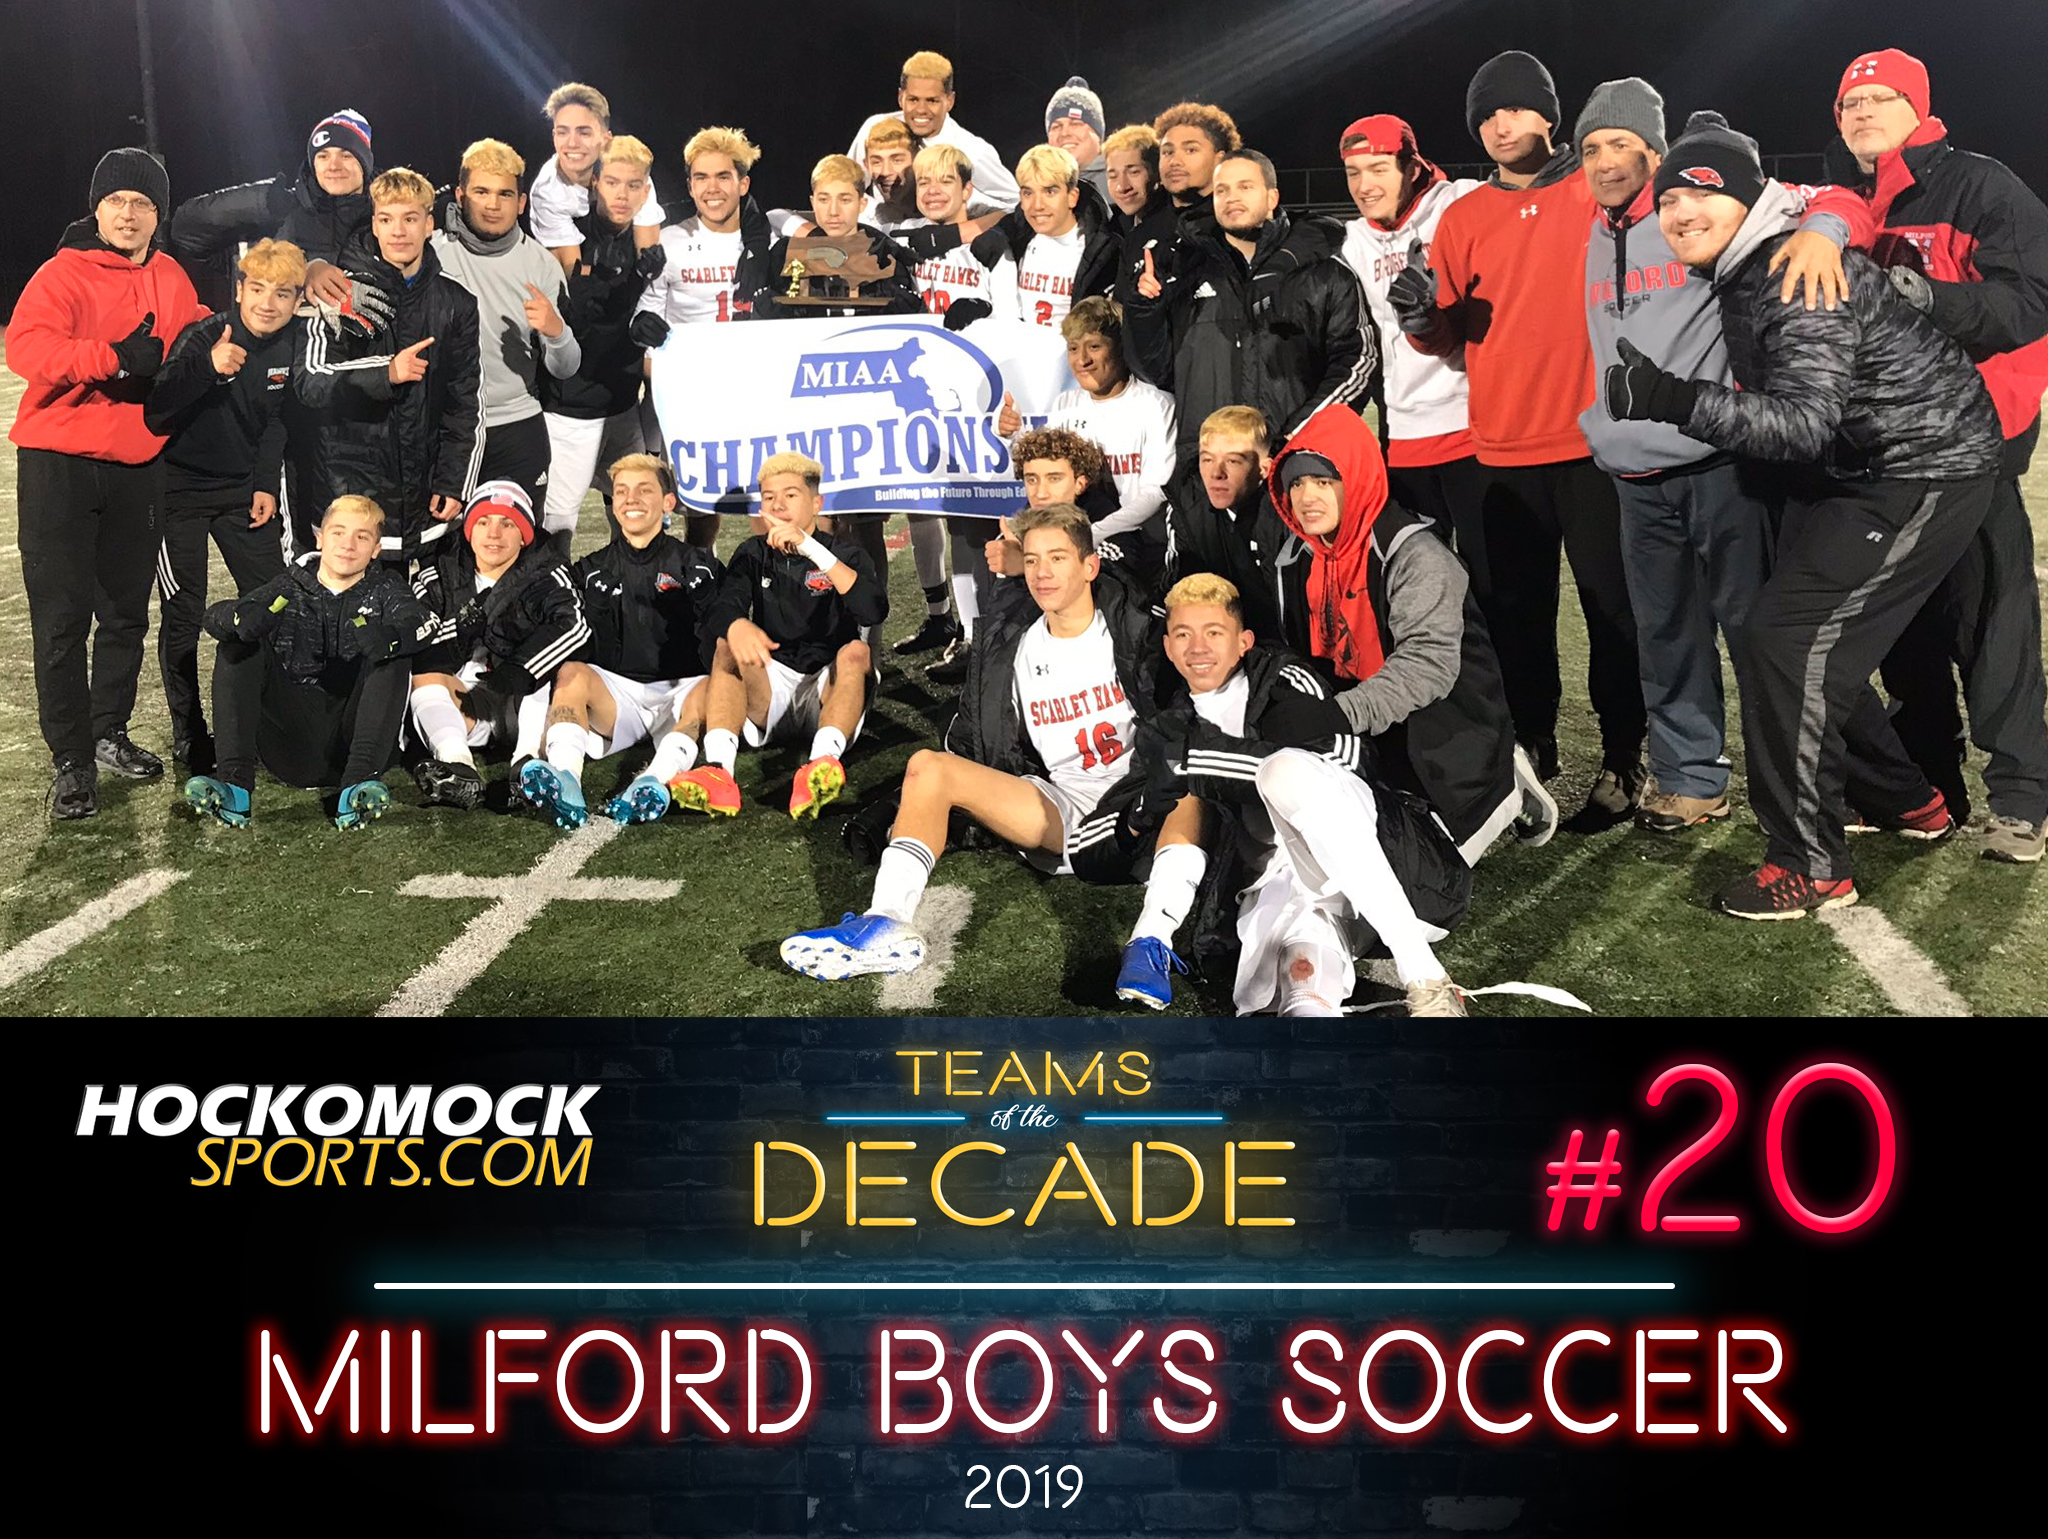 Milford boys soccer